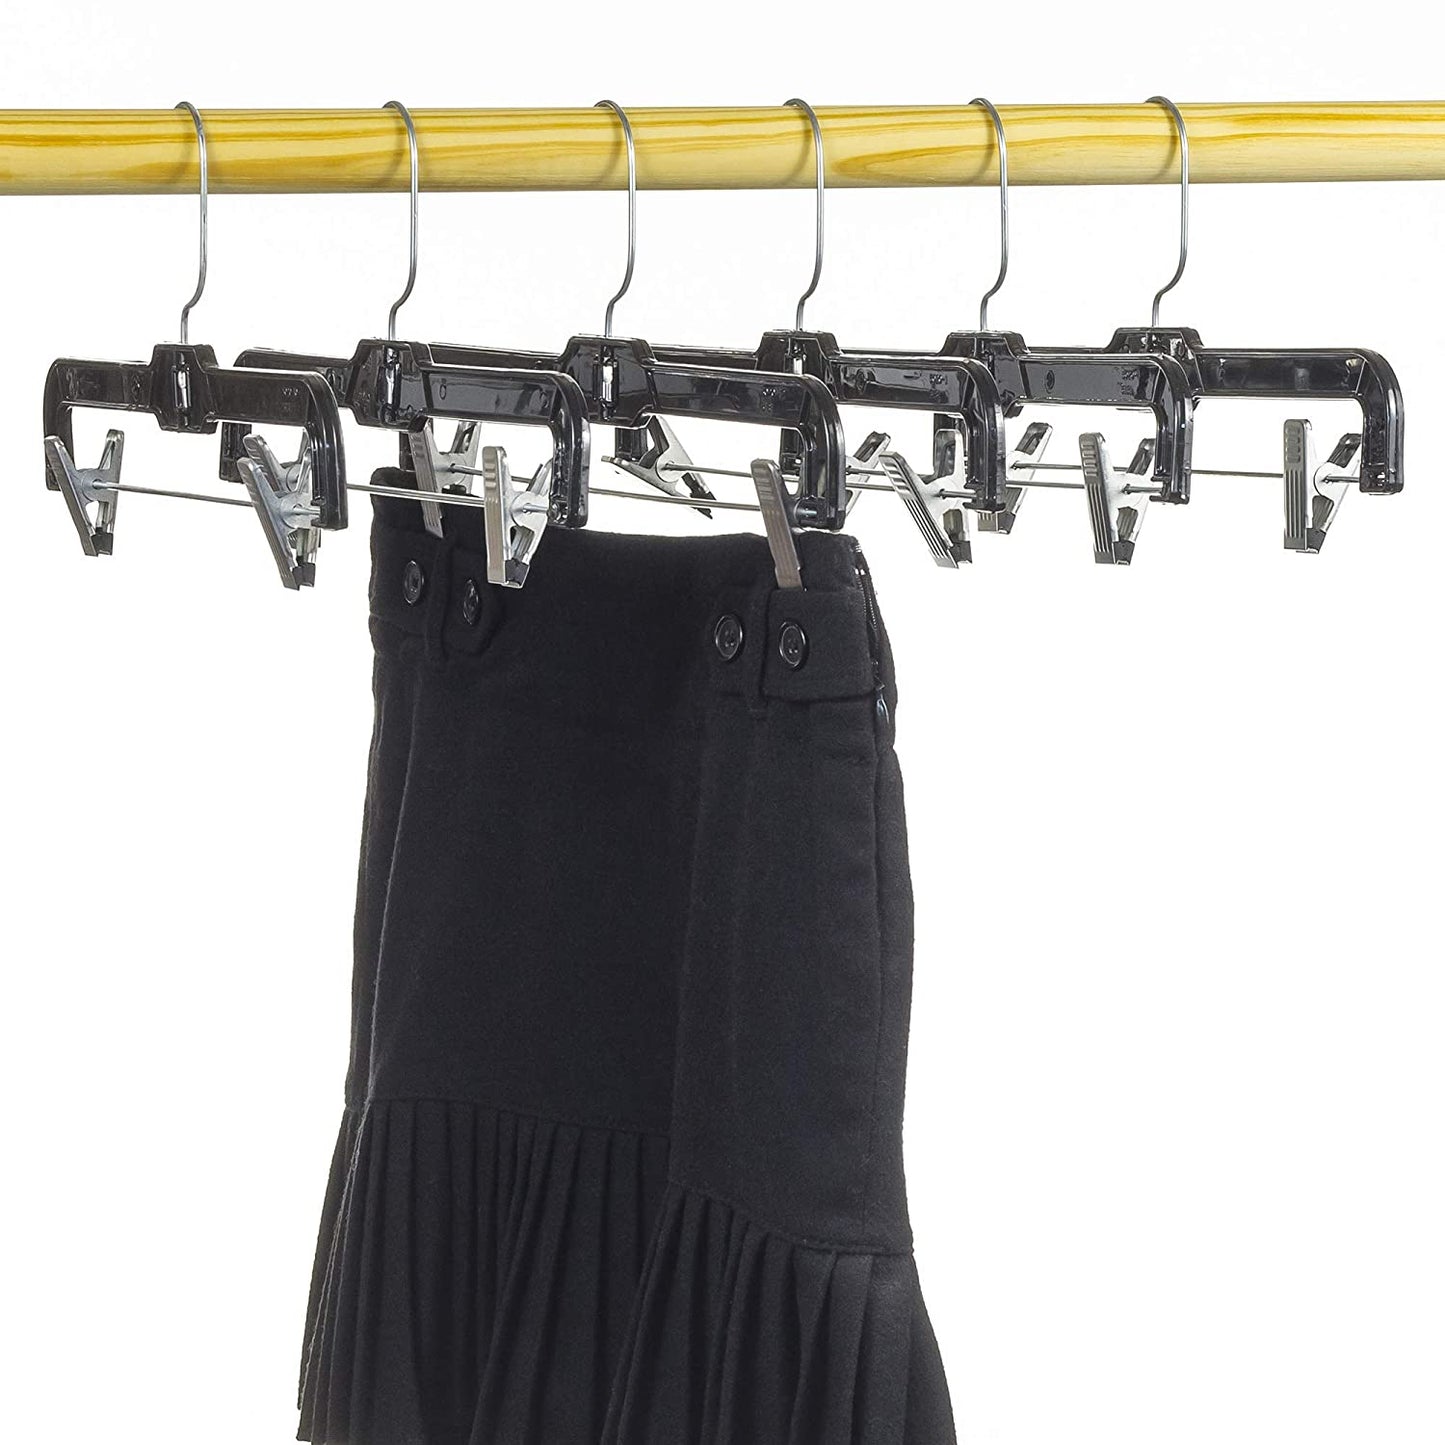 35.5cm Black Plastic Pant/Skirt Hanger with Clips Sold in Bundles of 25/50/100 - Rackshop Australia